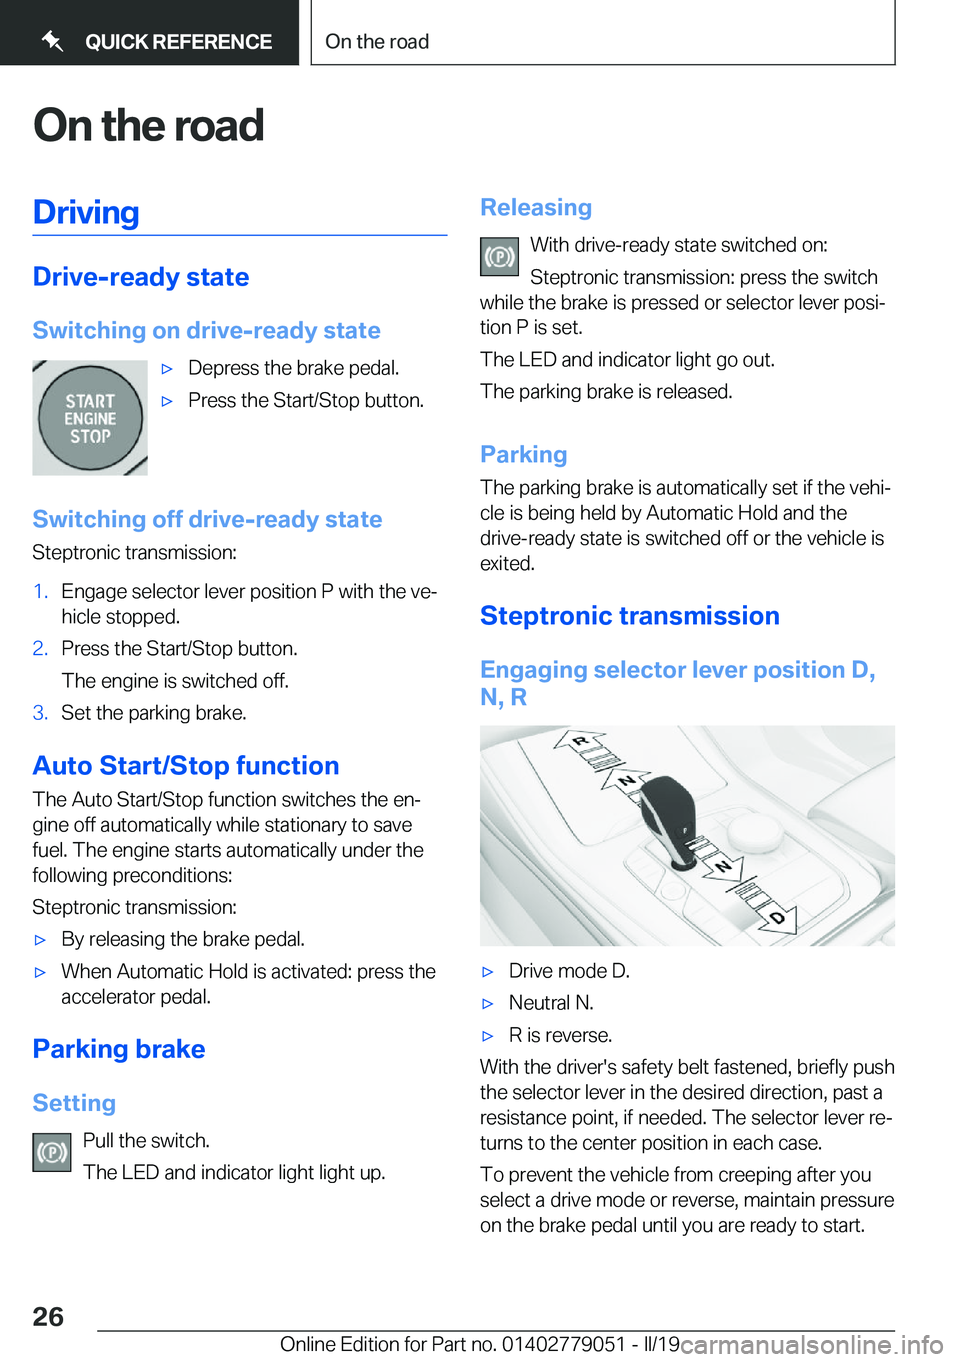 BMW 3 SERIES 2019 Owners Manual �O�n��t�h�e��r�o�a�d�D�r�i�v�i�n�g
�D�r�i�v�e�-�r�e�a�d�y��s�t�a�t�e
�S�w�i�t�c�h�i�n�g��o�n��d�r�i�v�e�-�r�e�a�d�y��s�t�a�t�e
'x�D�e�p�r�e�s�s��t�h�e��b�r�a�k�e��p�e�d�a�l�.'x�P�r�e�